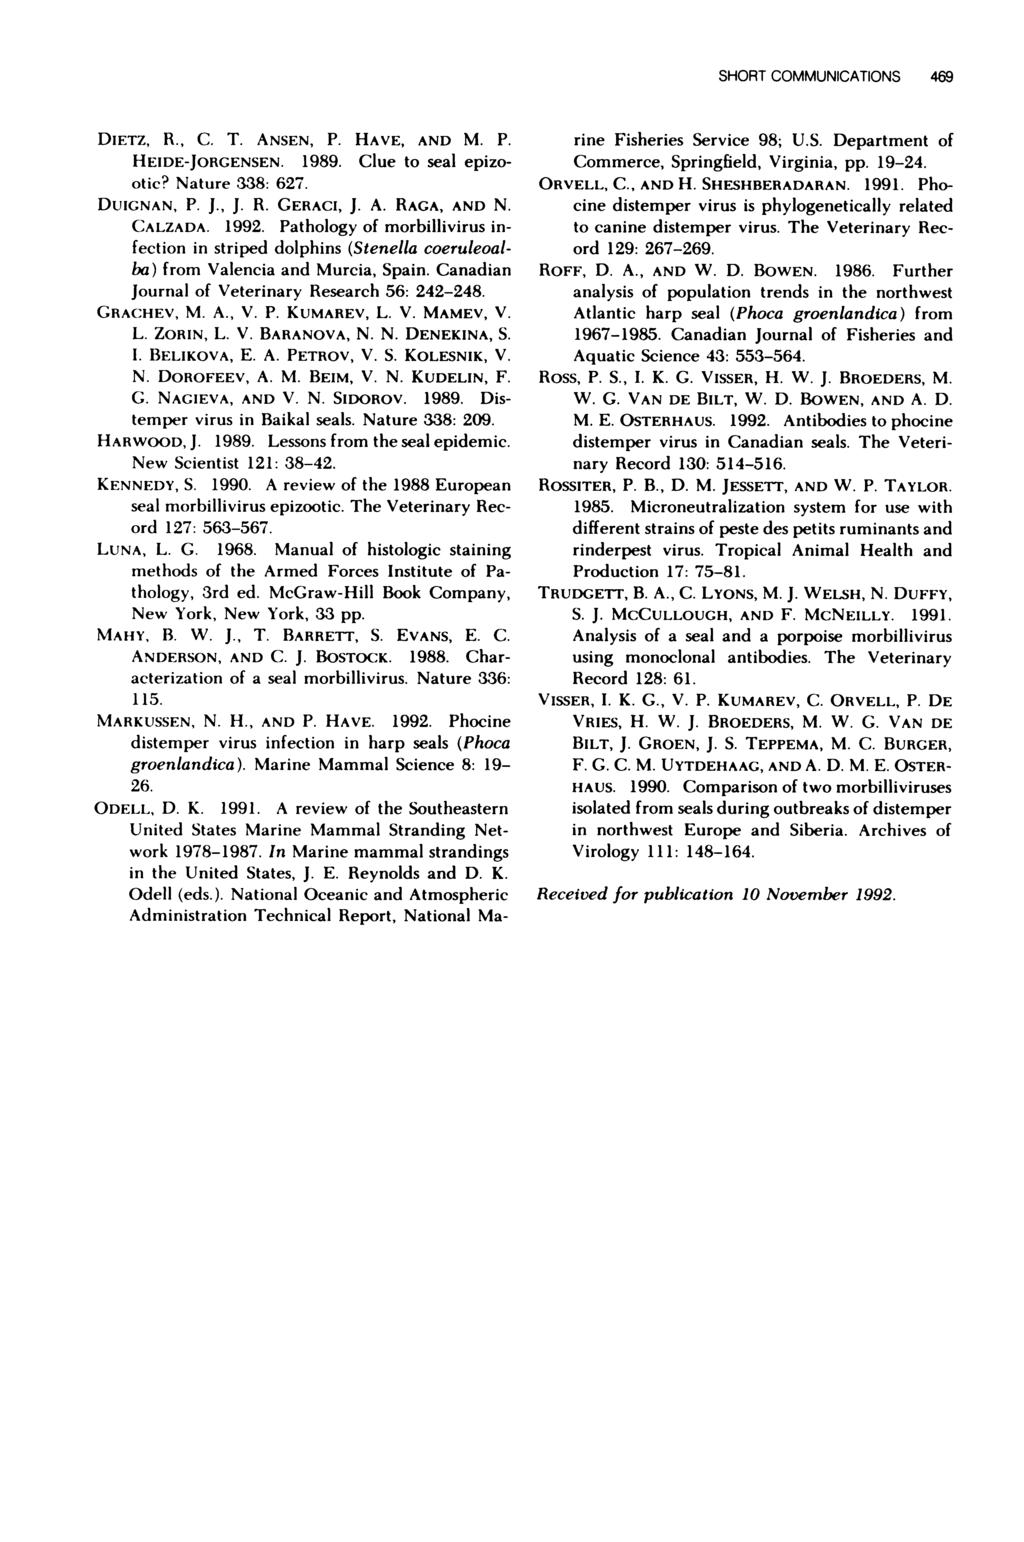 SHORT COMMUNICATIONS 469 DIETz, R., C. T. ANSEN, P. HAVE, AND M. P. HEIDE-JORGENSEN. 1989. Clue to seal epizootic? Nature 338: 627. DUIGNAN, P. J., J. H. GERACI, J. A. RAGA, AND N. CALZADA. 1992.